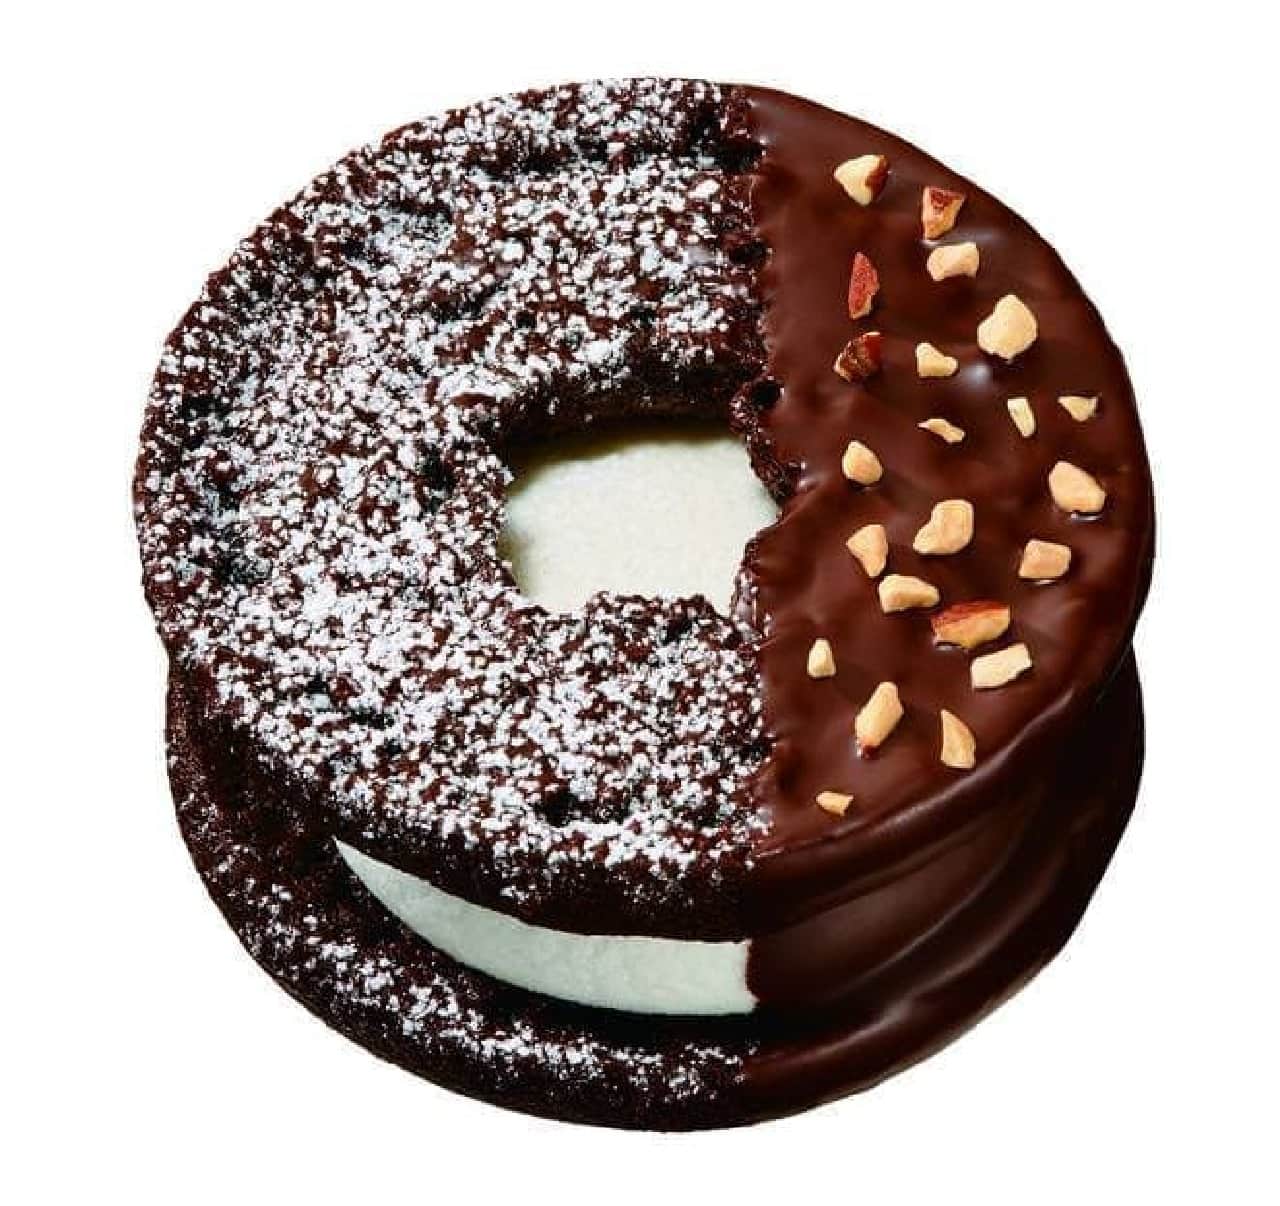 Mister Donut "Roasted Marshmallow Chocolate"